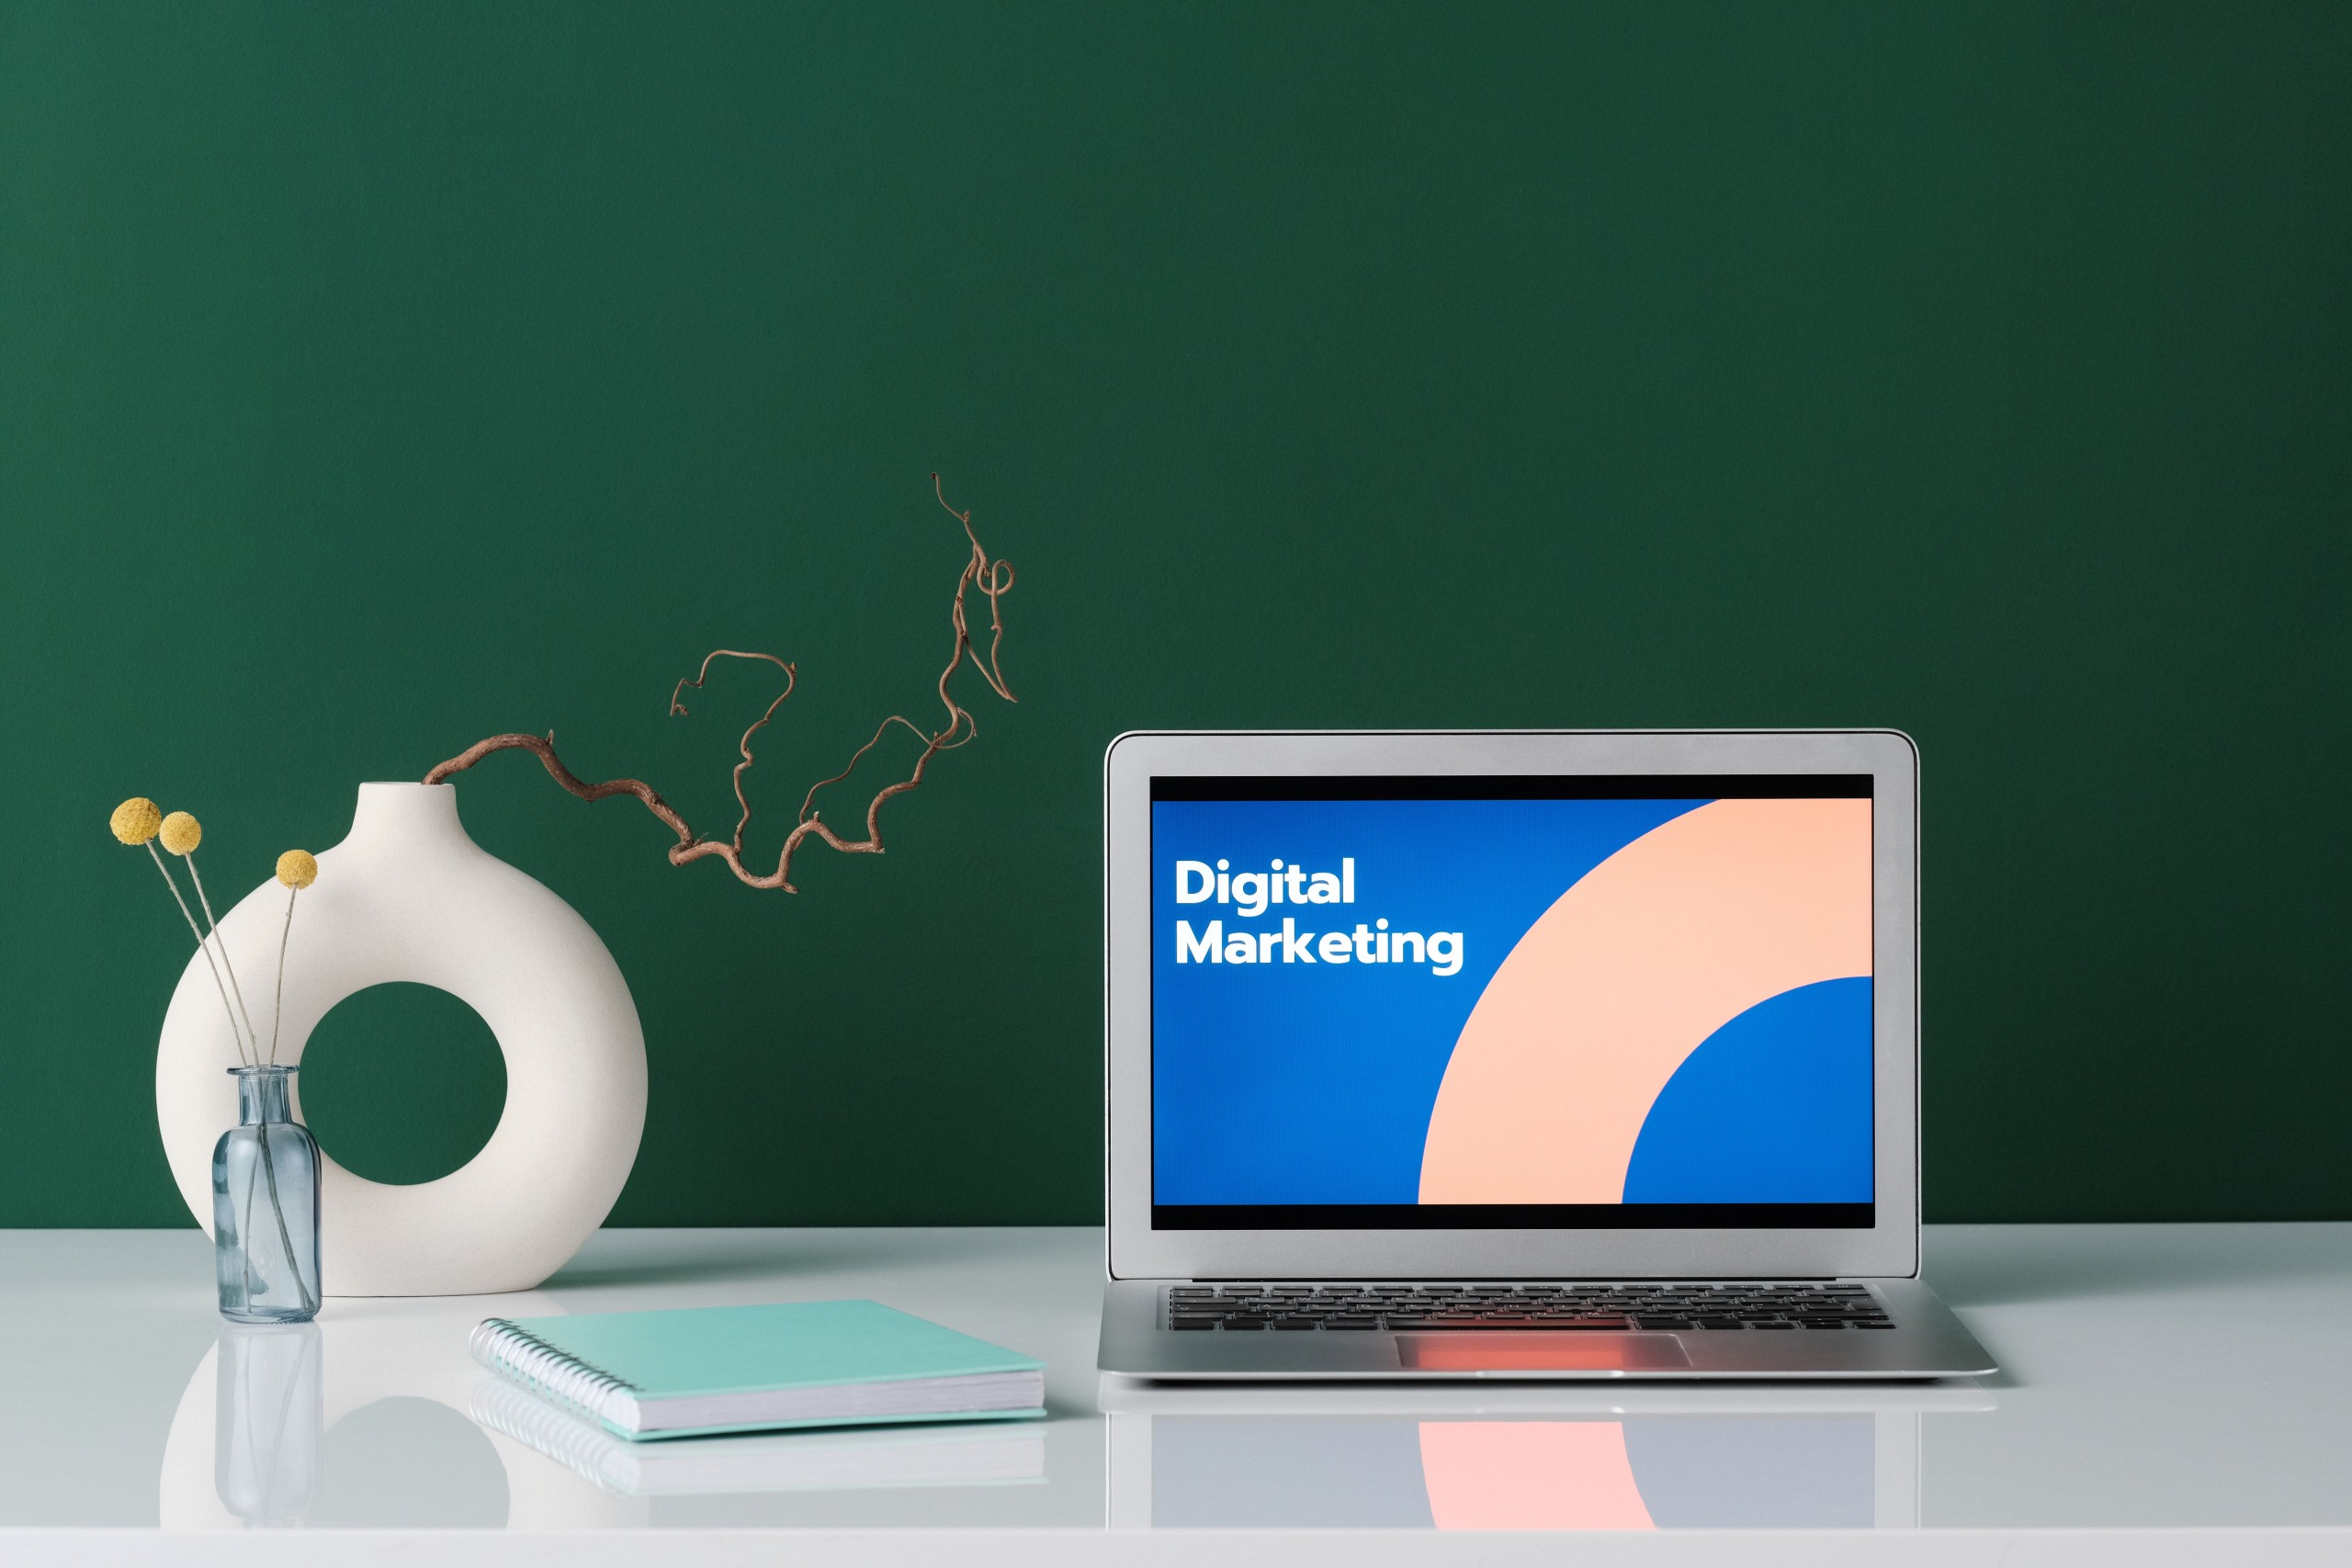 Online Marketing Tips Make Digital Marketing Less Daunting